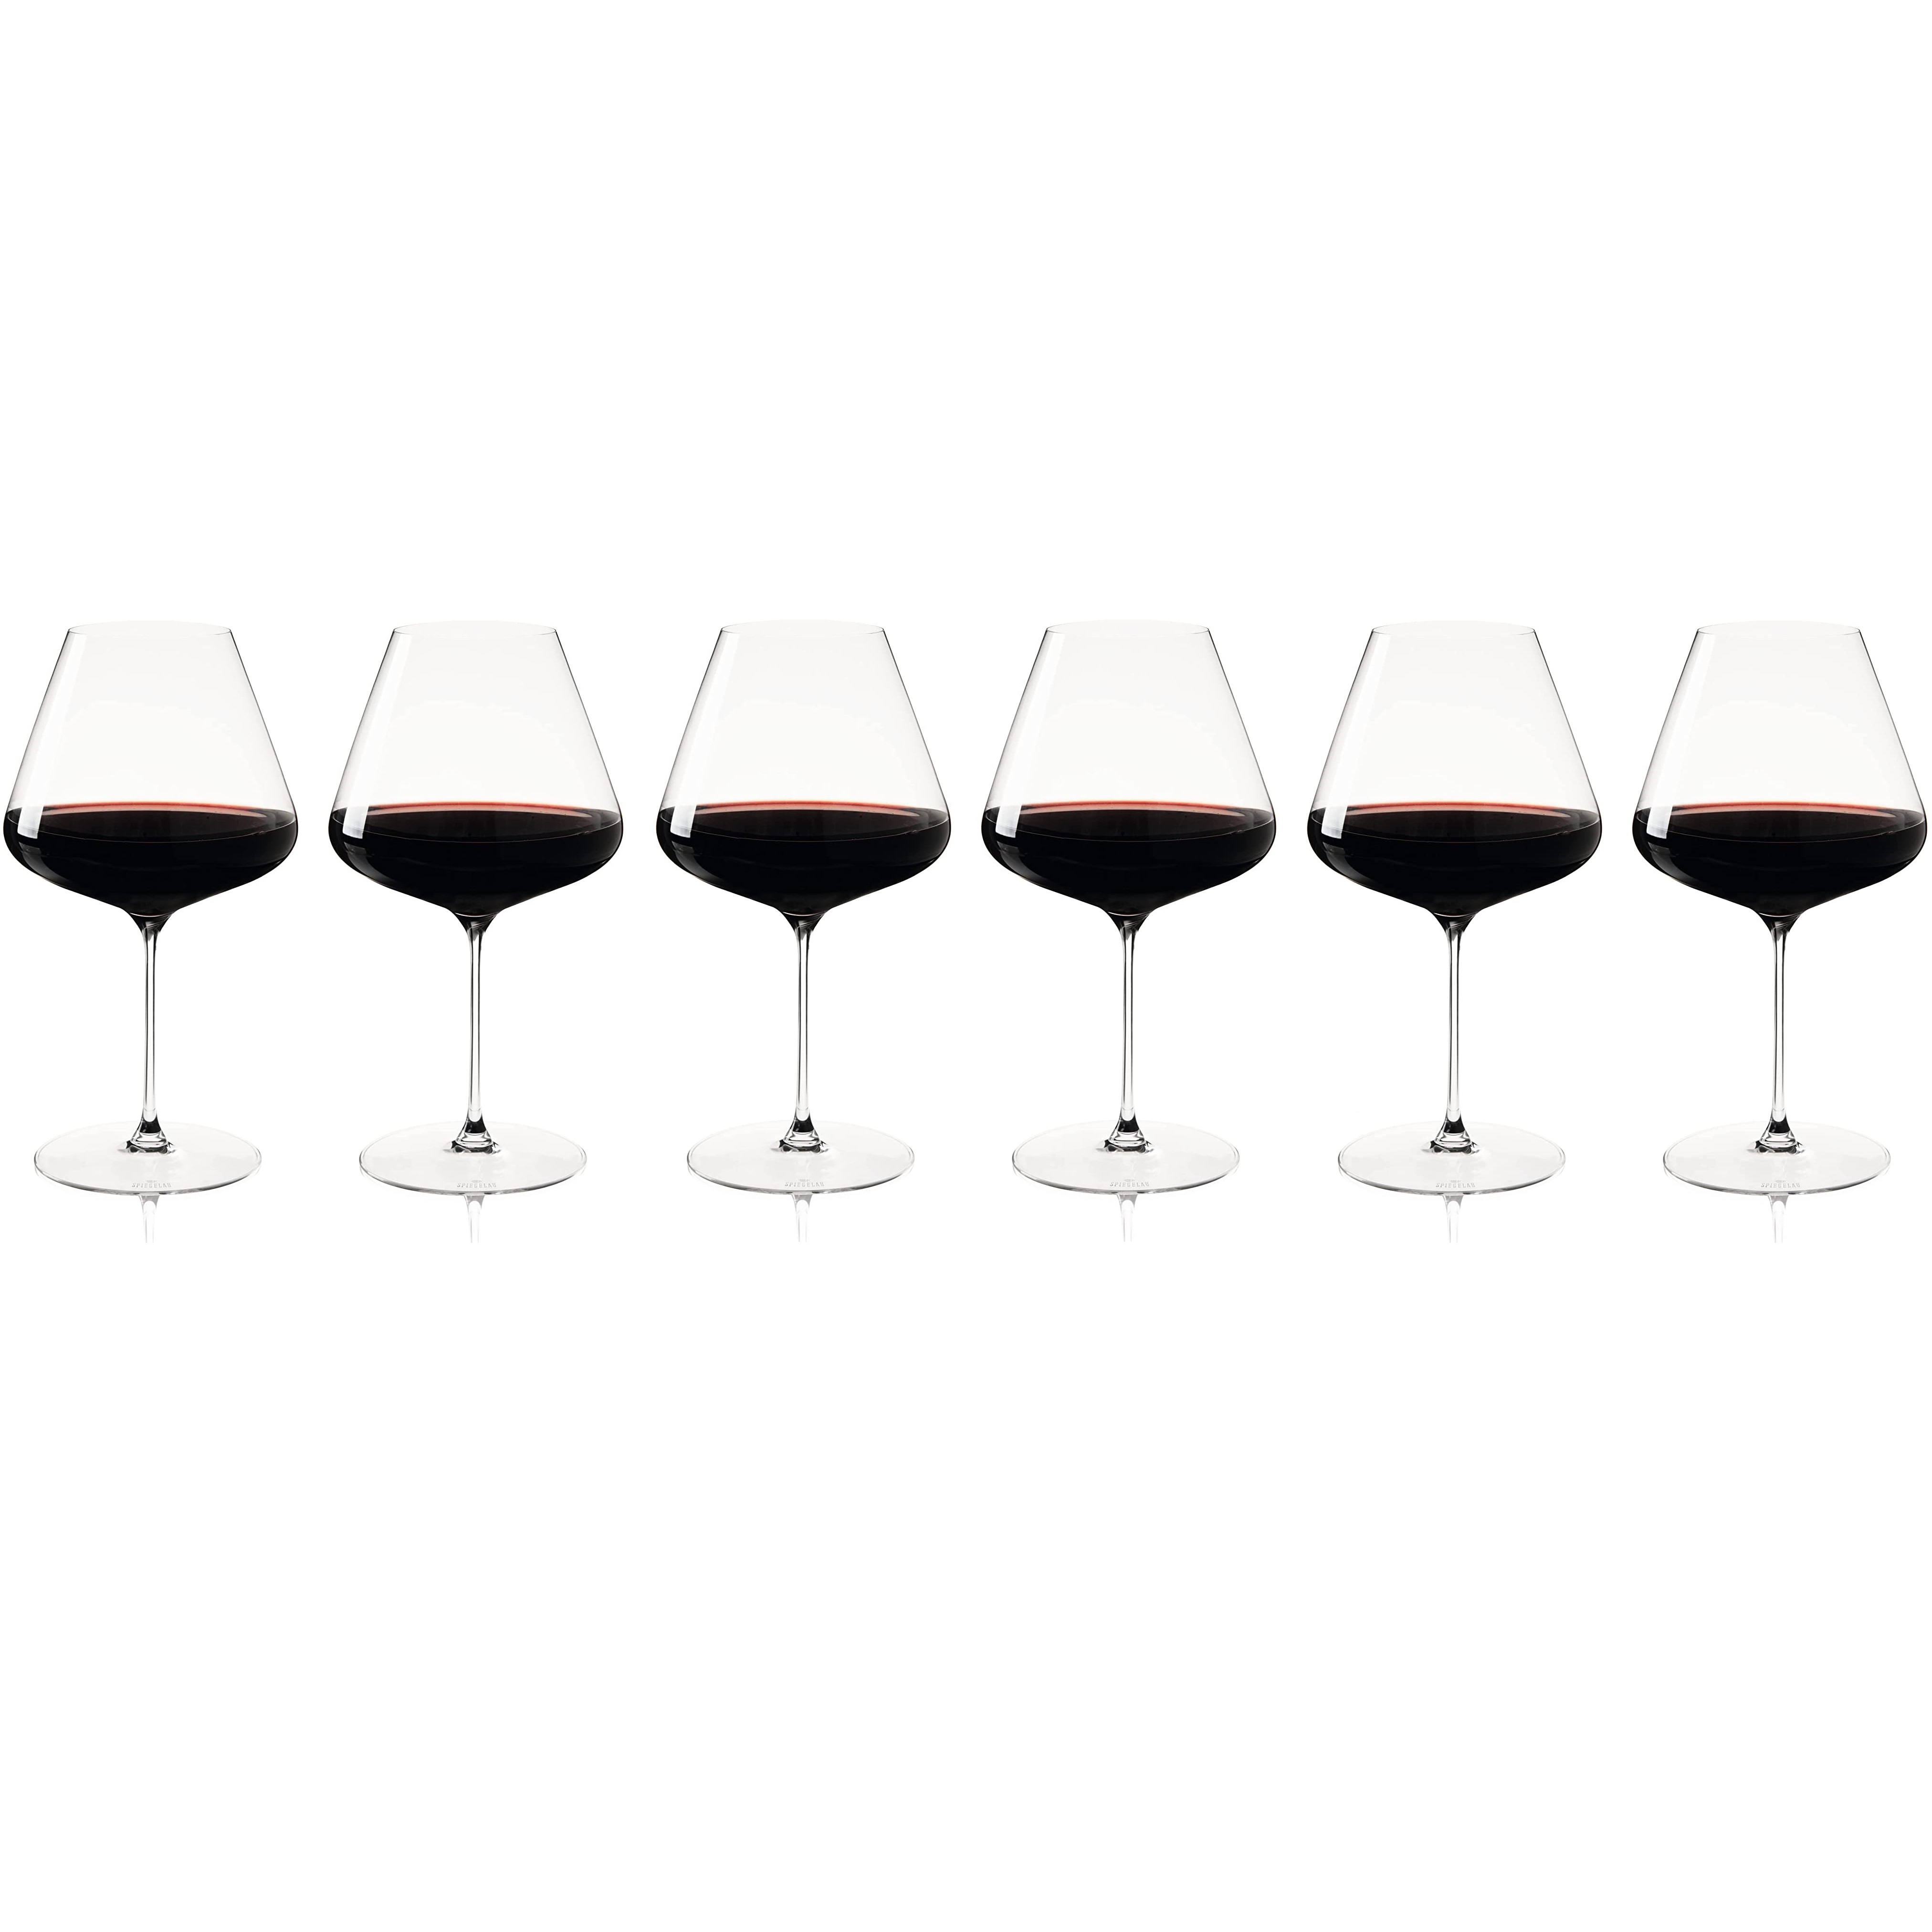 6 бокалов для красного вина Spiegelau Definition Burgundy 960 мл (арт. 1350100)